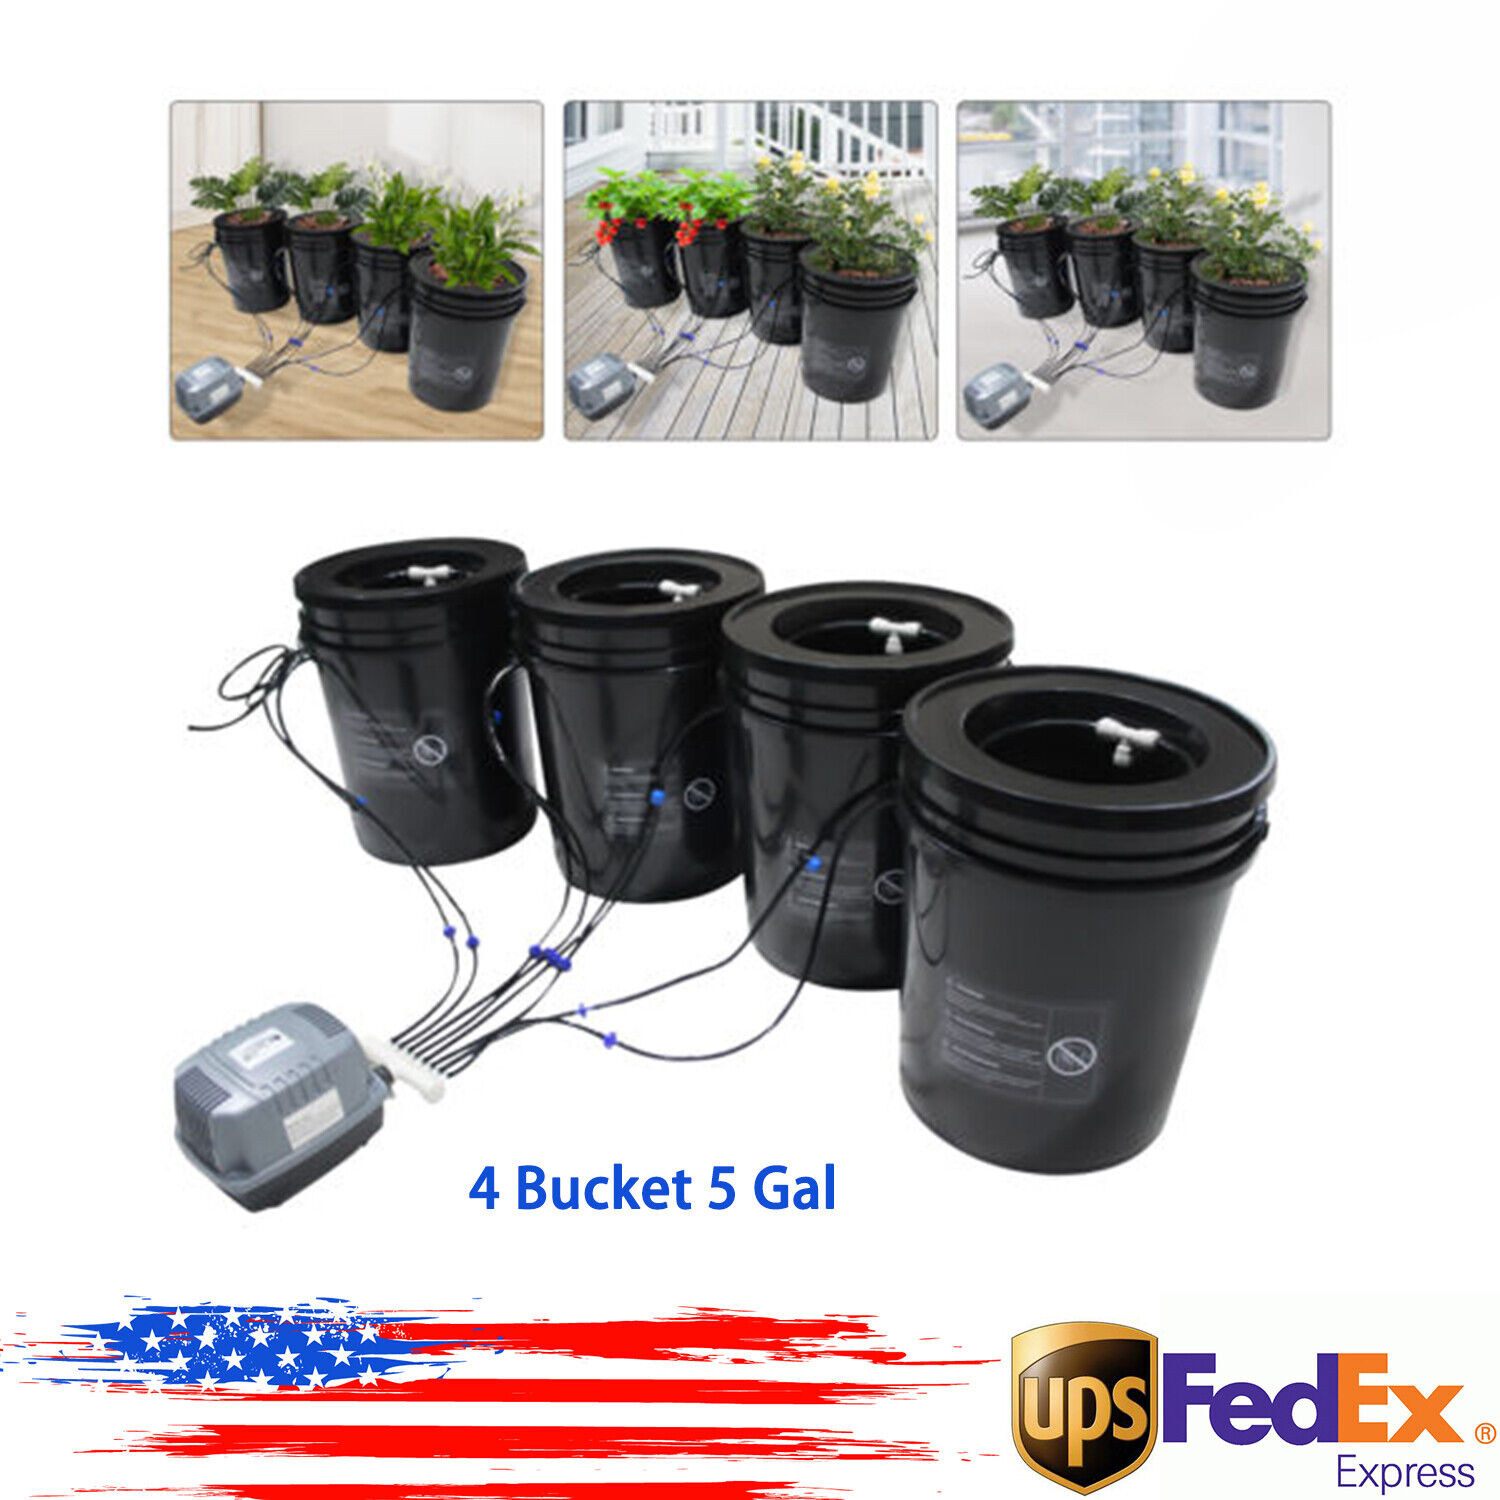 4 Bucket 5 Gal DWC Hydroponic Grow System w/ Top Drip Kit Planter + Air Pump 15W